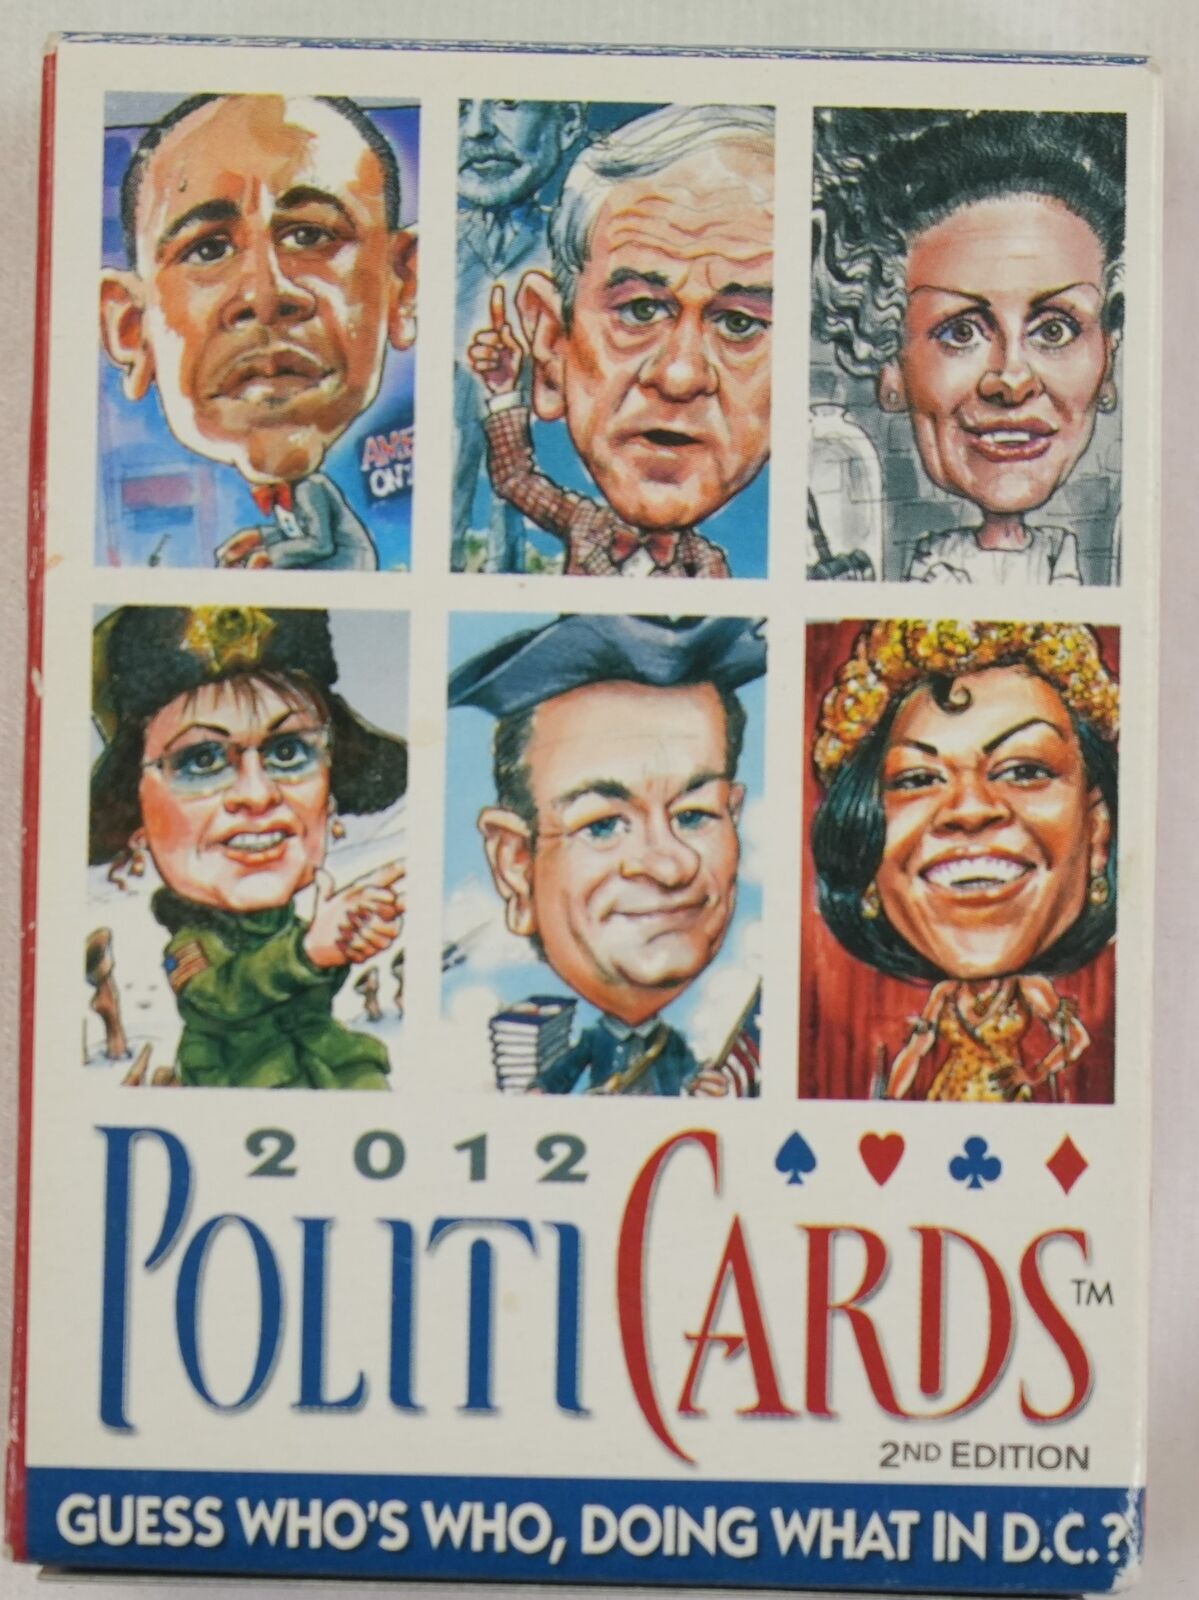  Politicards Politics 2012 Playing Card Deck